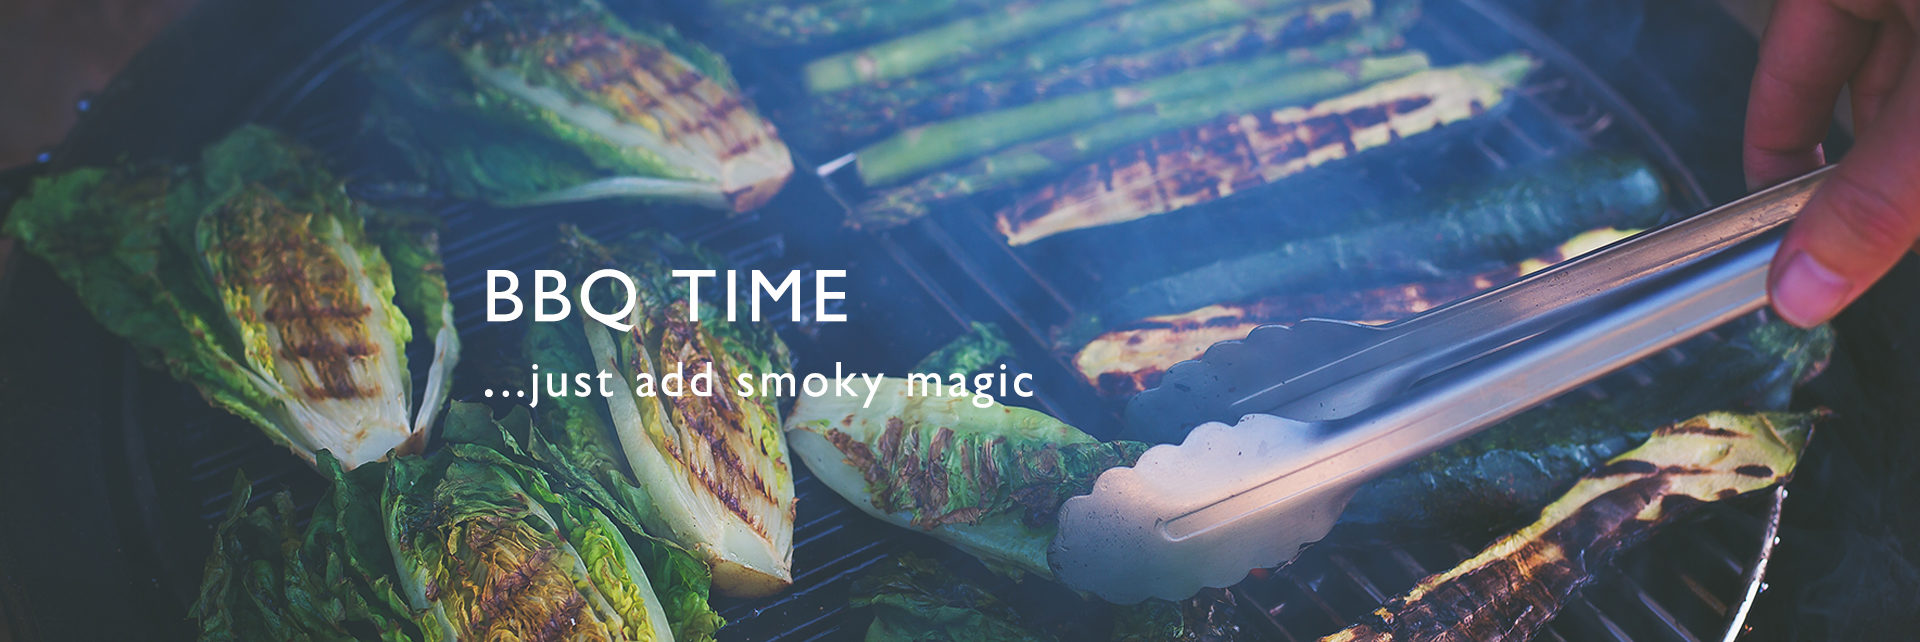 BBQ Time...just add smoky magic. Hot Smoked Greens